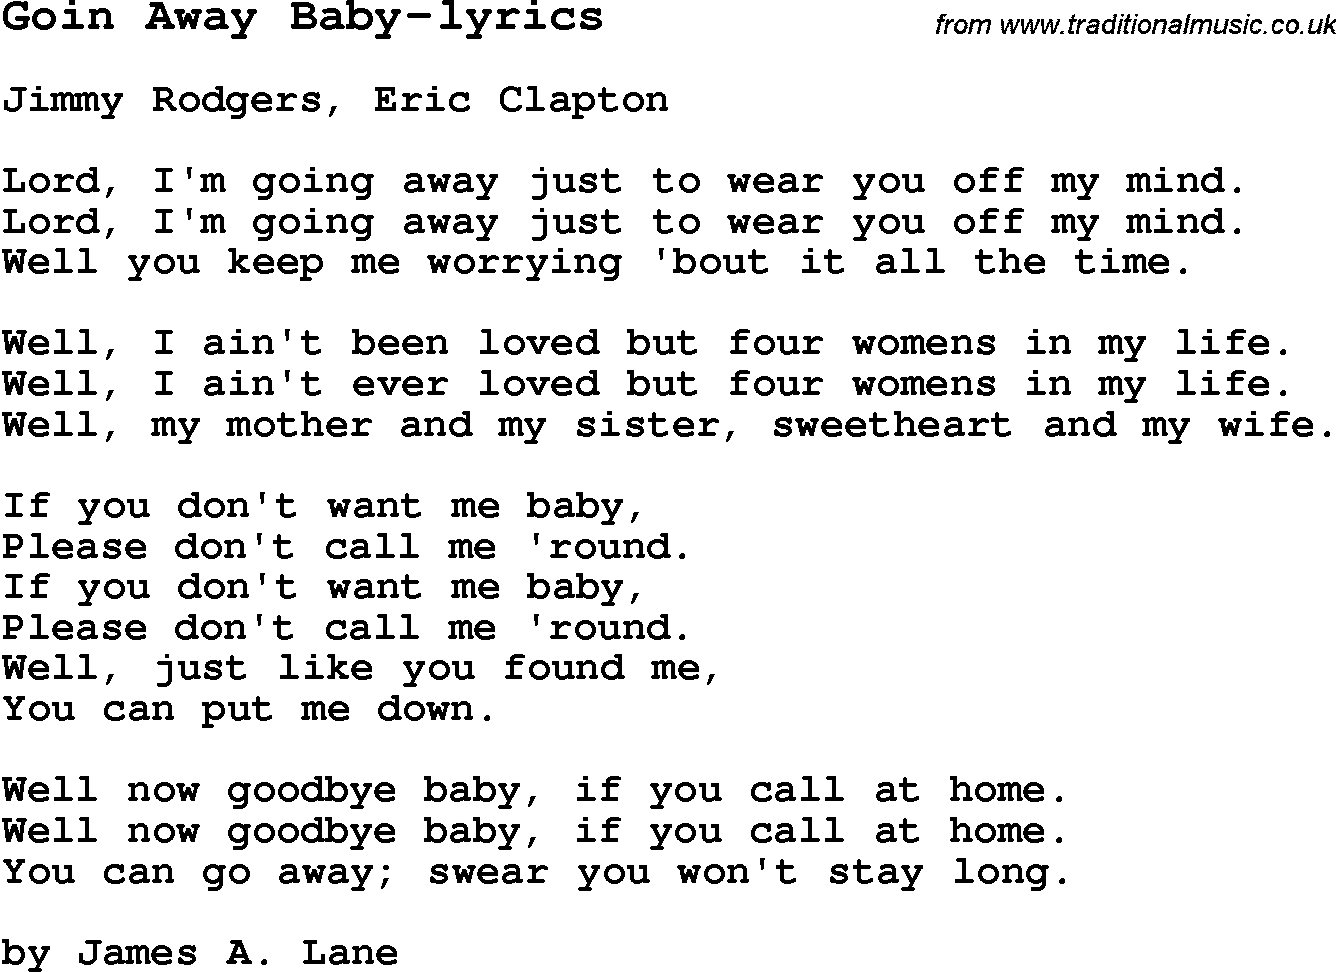 Blues Guitar Song, lyrics, chords, tablature, playing hints for Goin Away Baby-lyrics